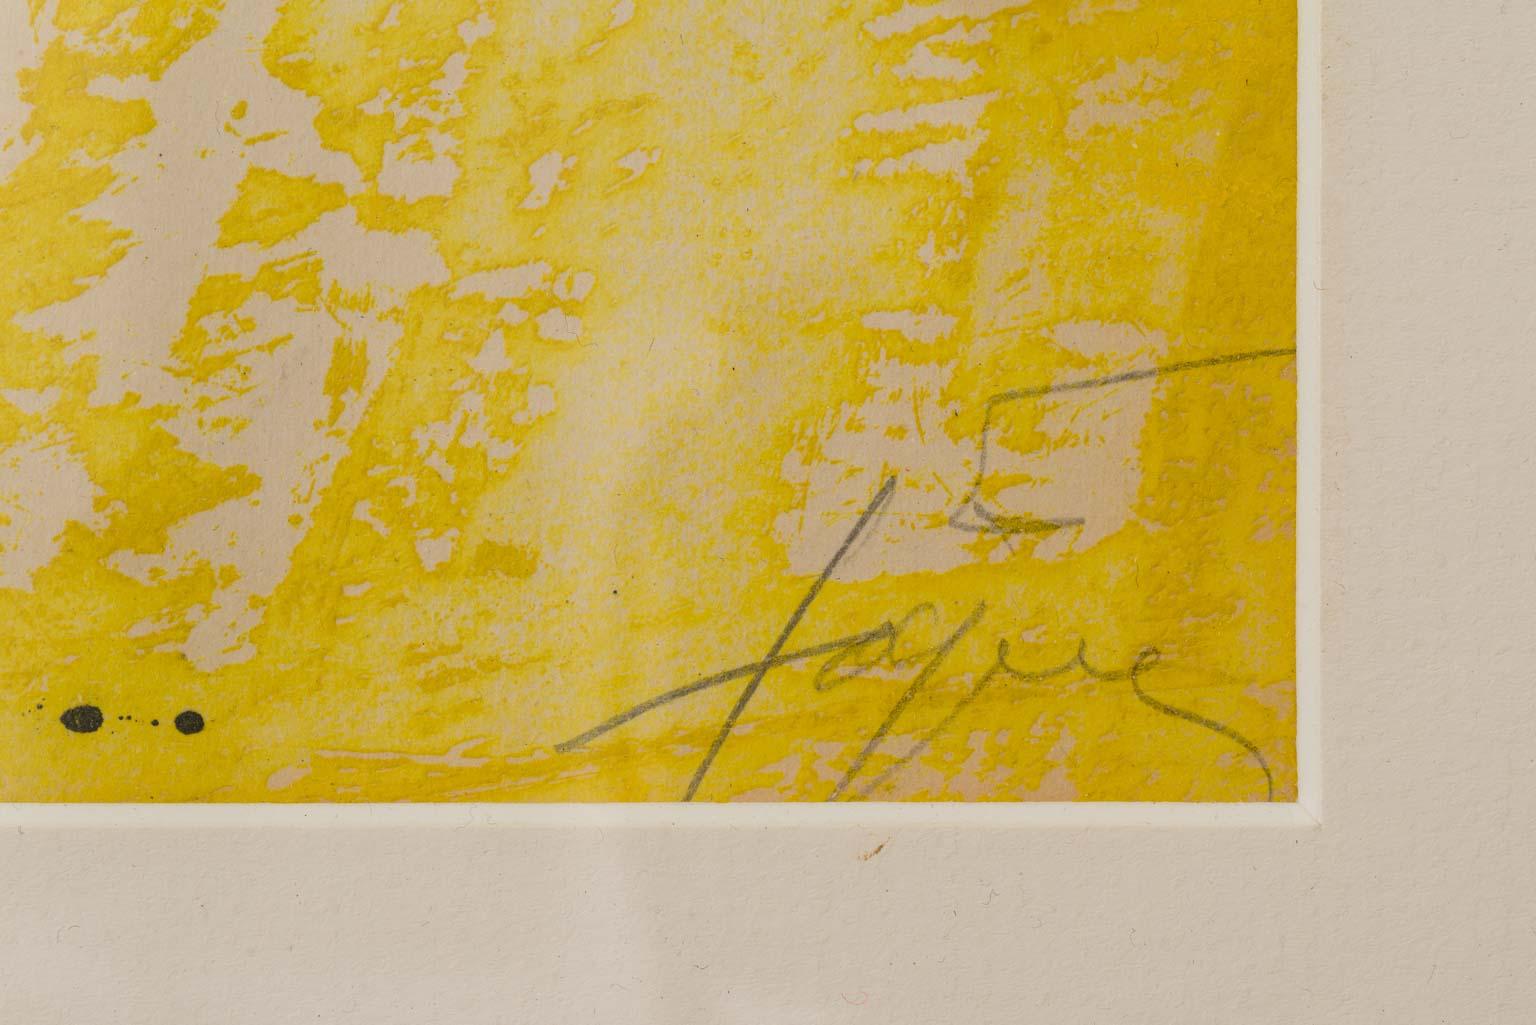 La Cometa - Etching in Yellow, Black, Braun and Red modern artwork Antoni Tàpies 1